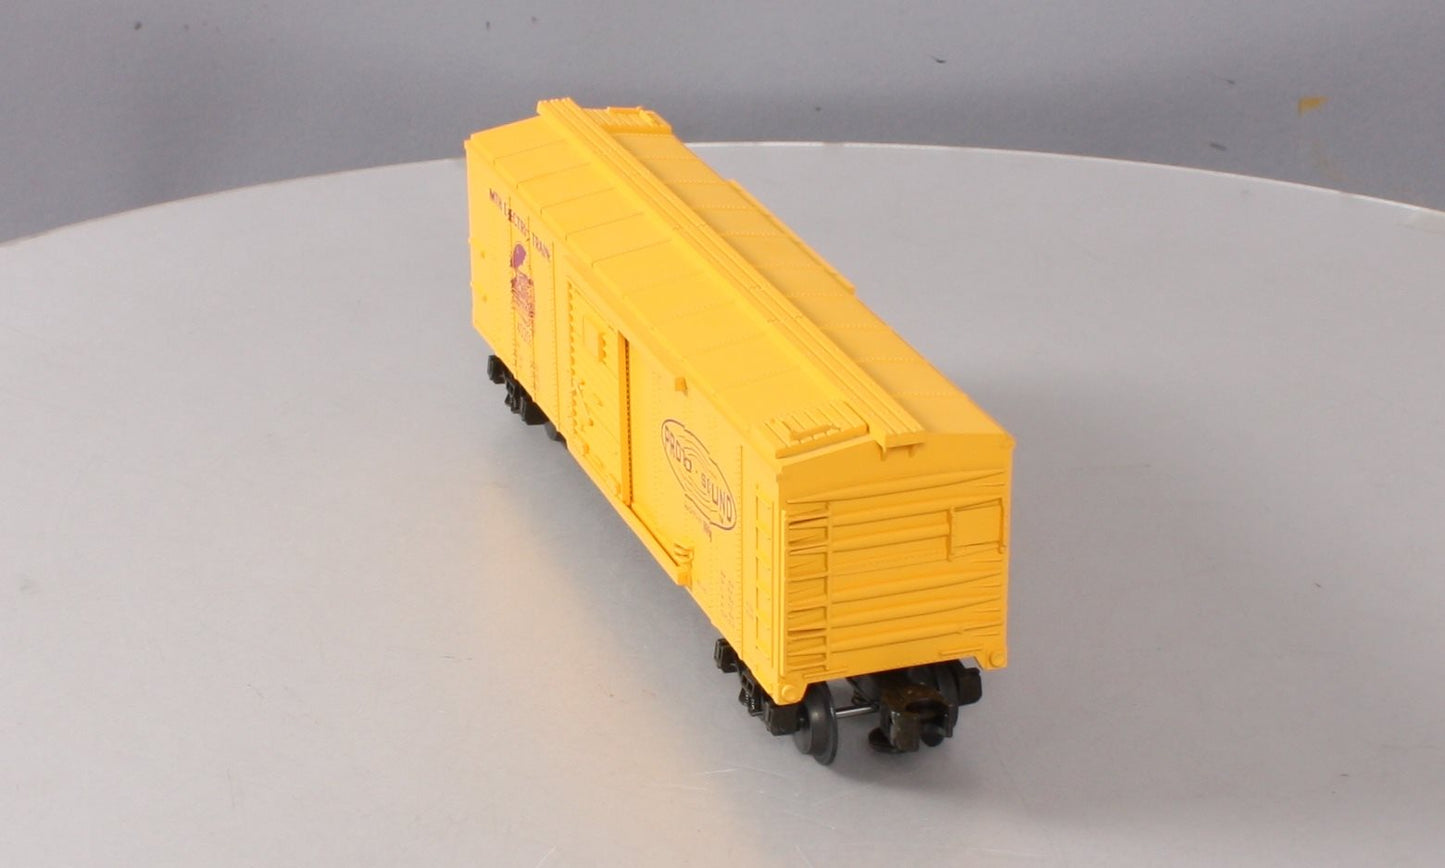 MTH 40200 ProtoSound O Gauge Box Car w/Shifting Freight #40200 Sound LN/Box